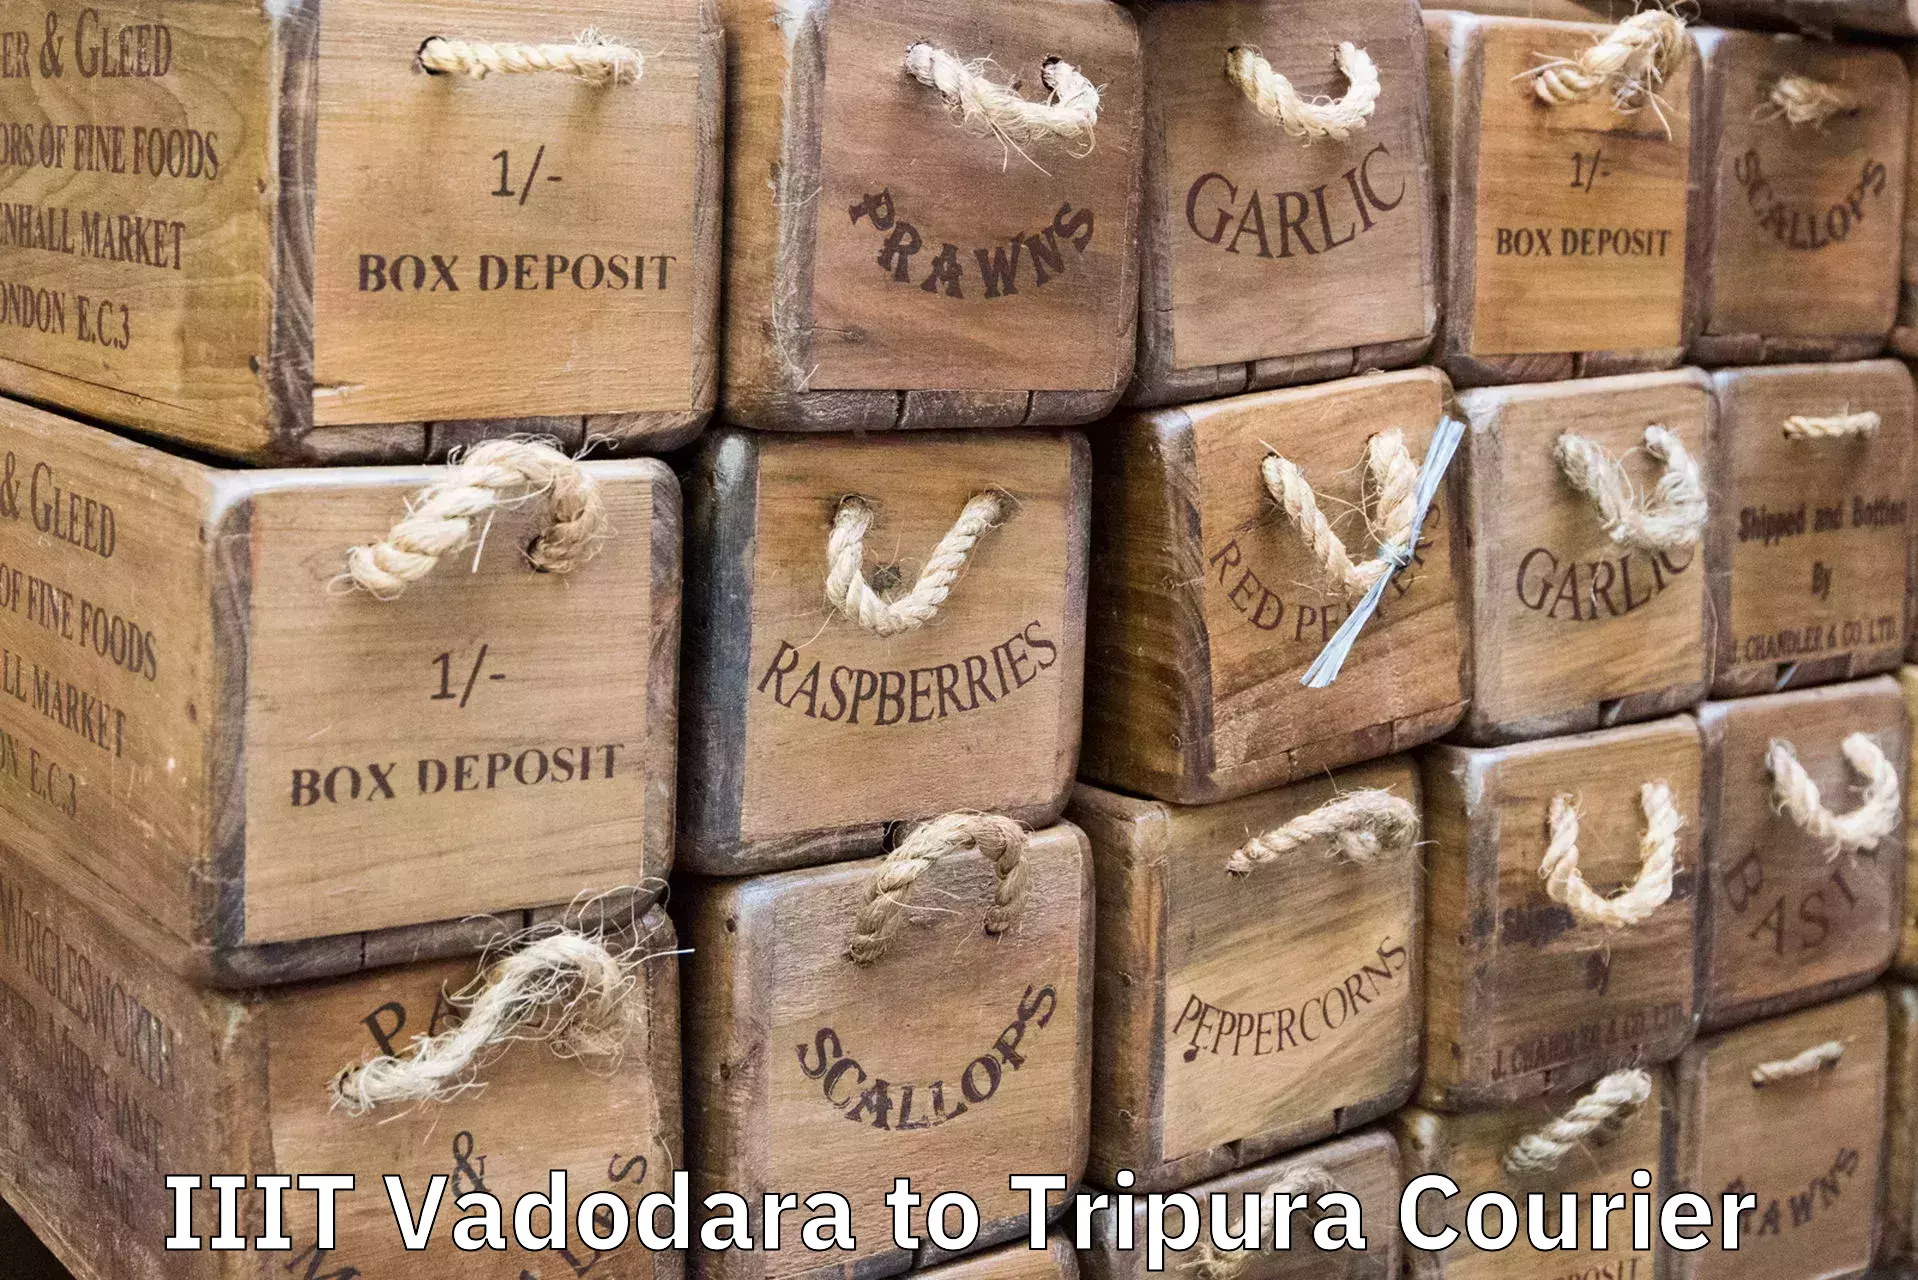 Luggage transport consulting IIIT Vadodara to Udaipur Tripura